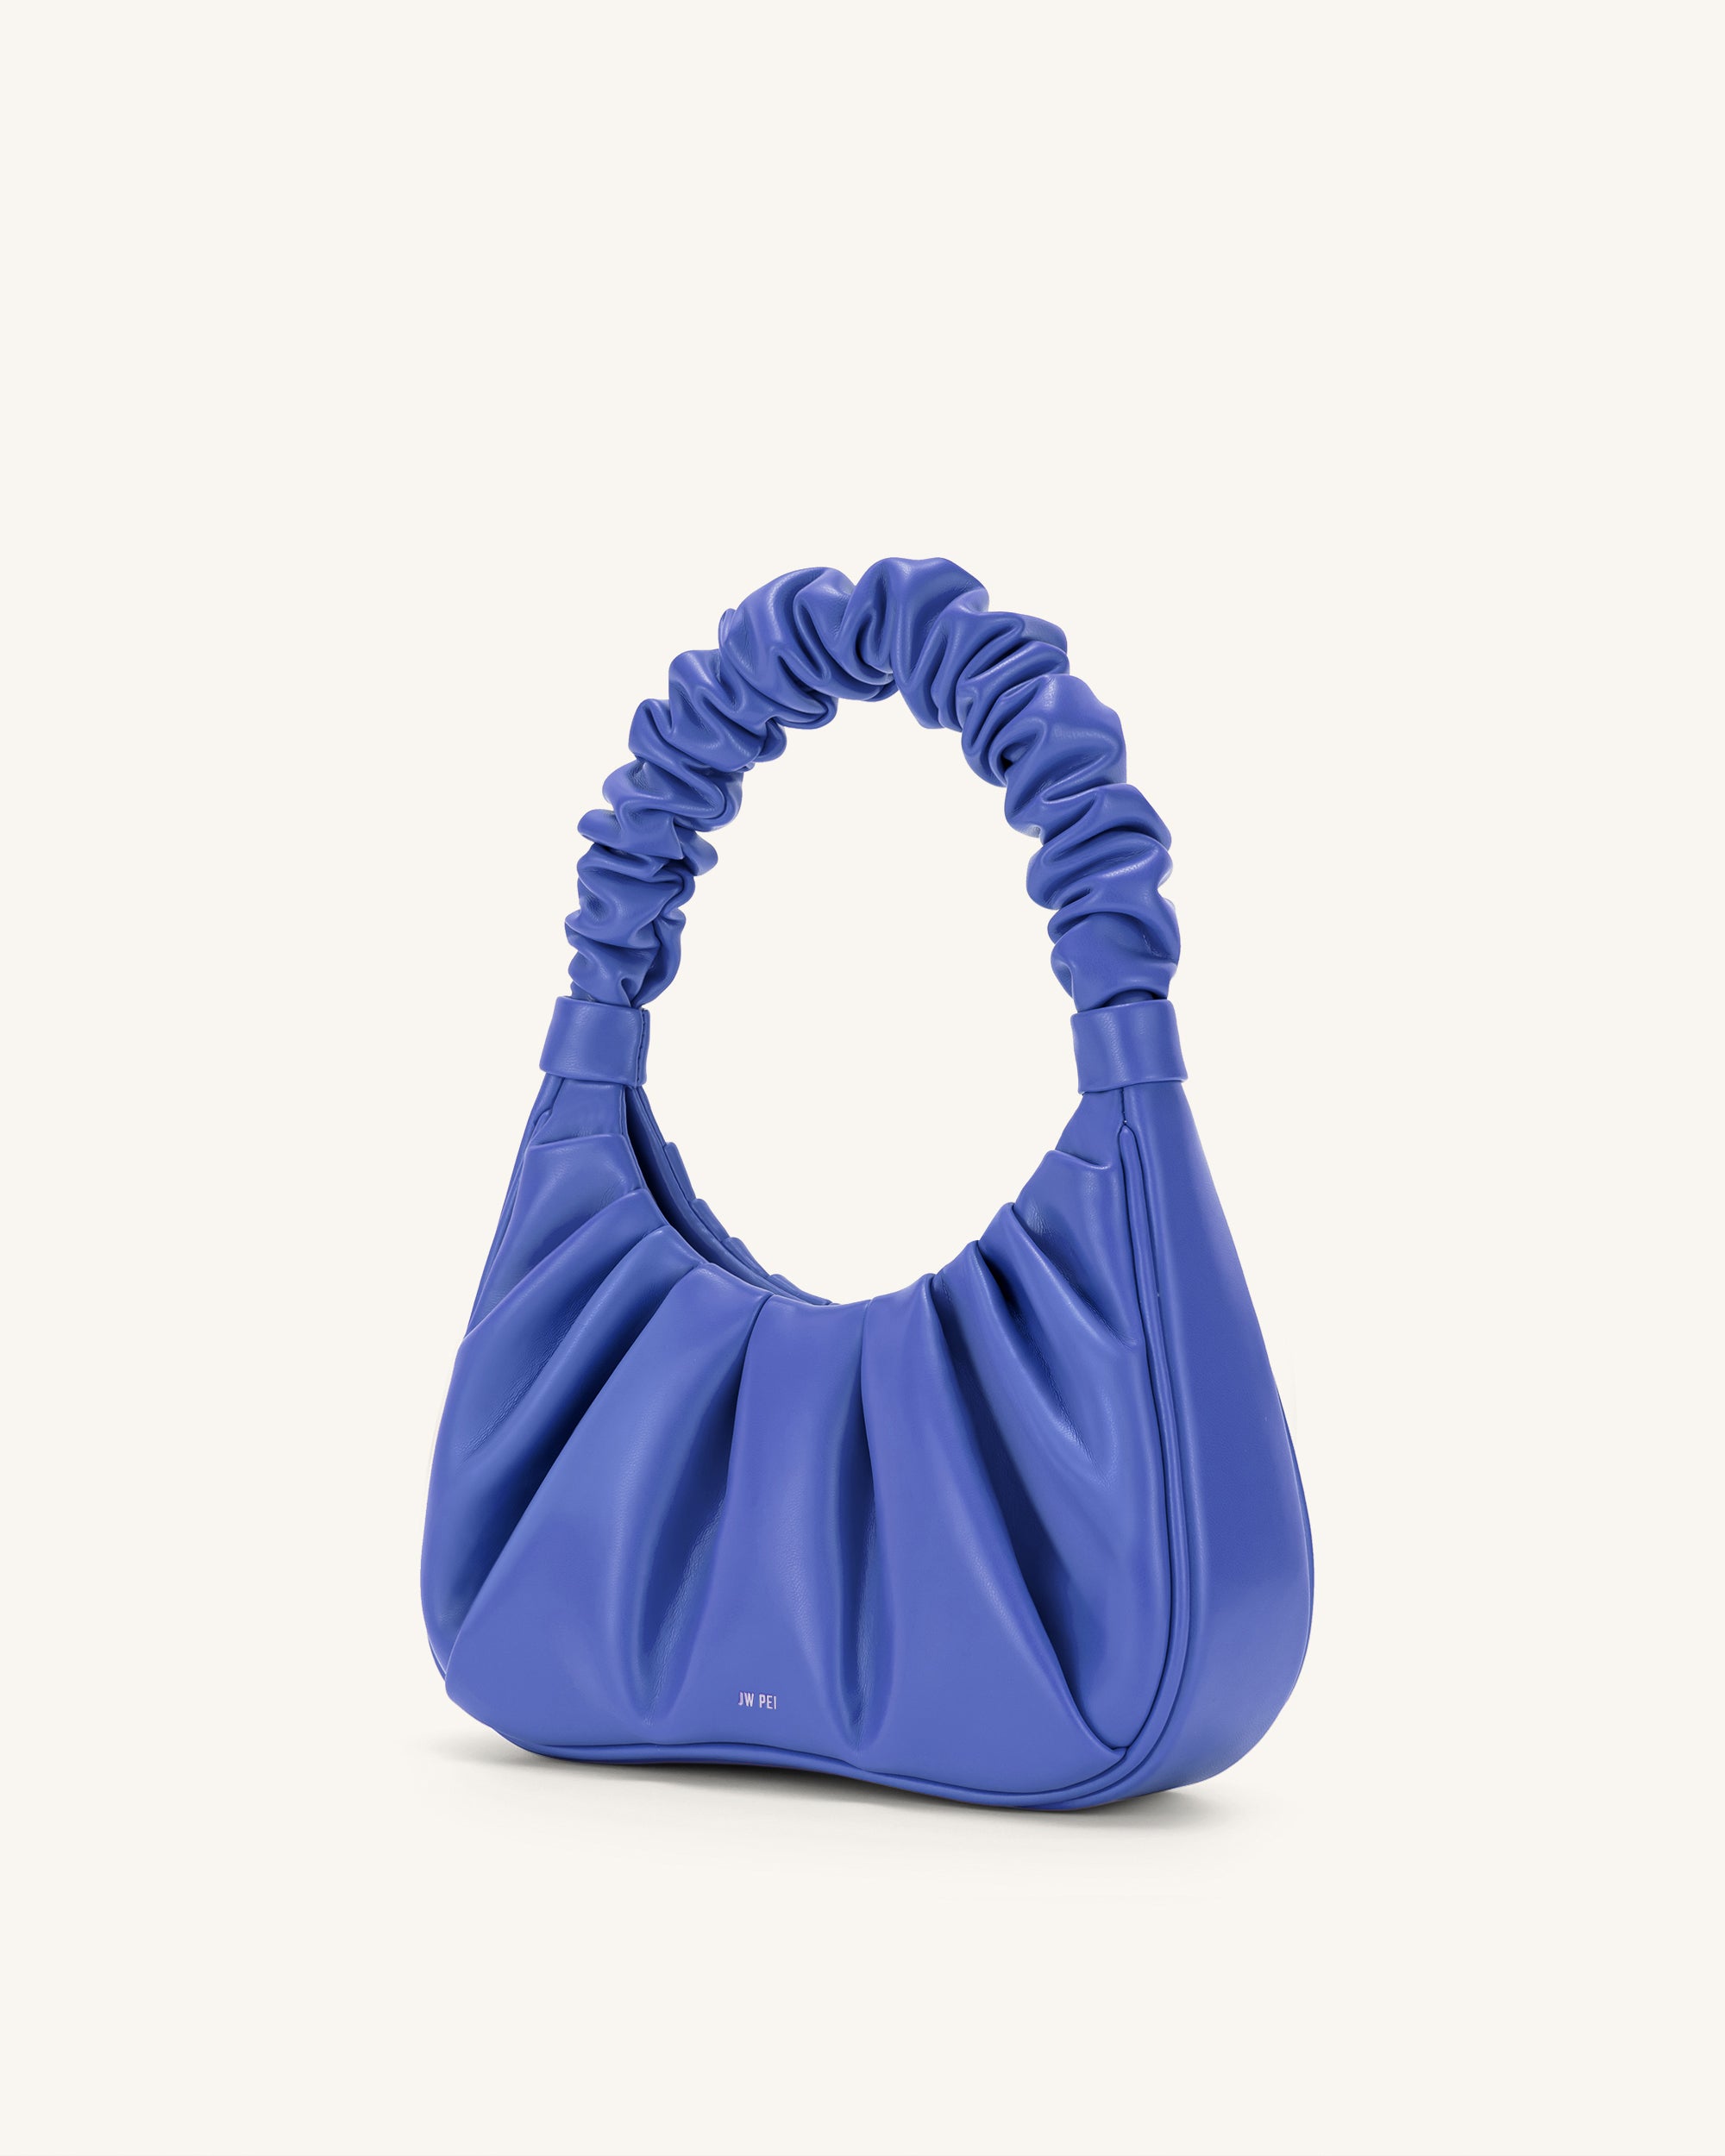 Ruby Shoulder Bag - White Croc - Fashion Women Vegan Bag Online Shopping - JW Pei